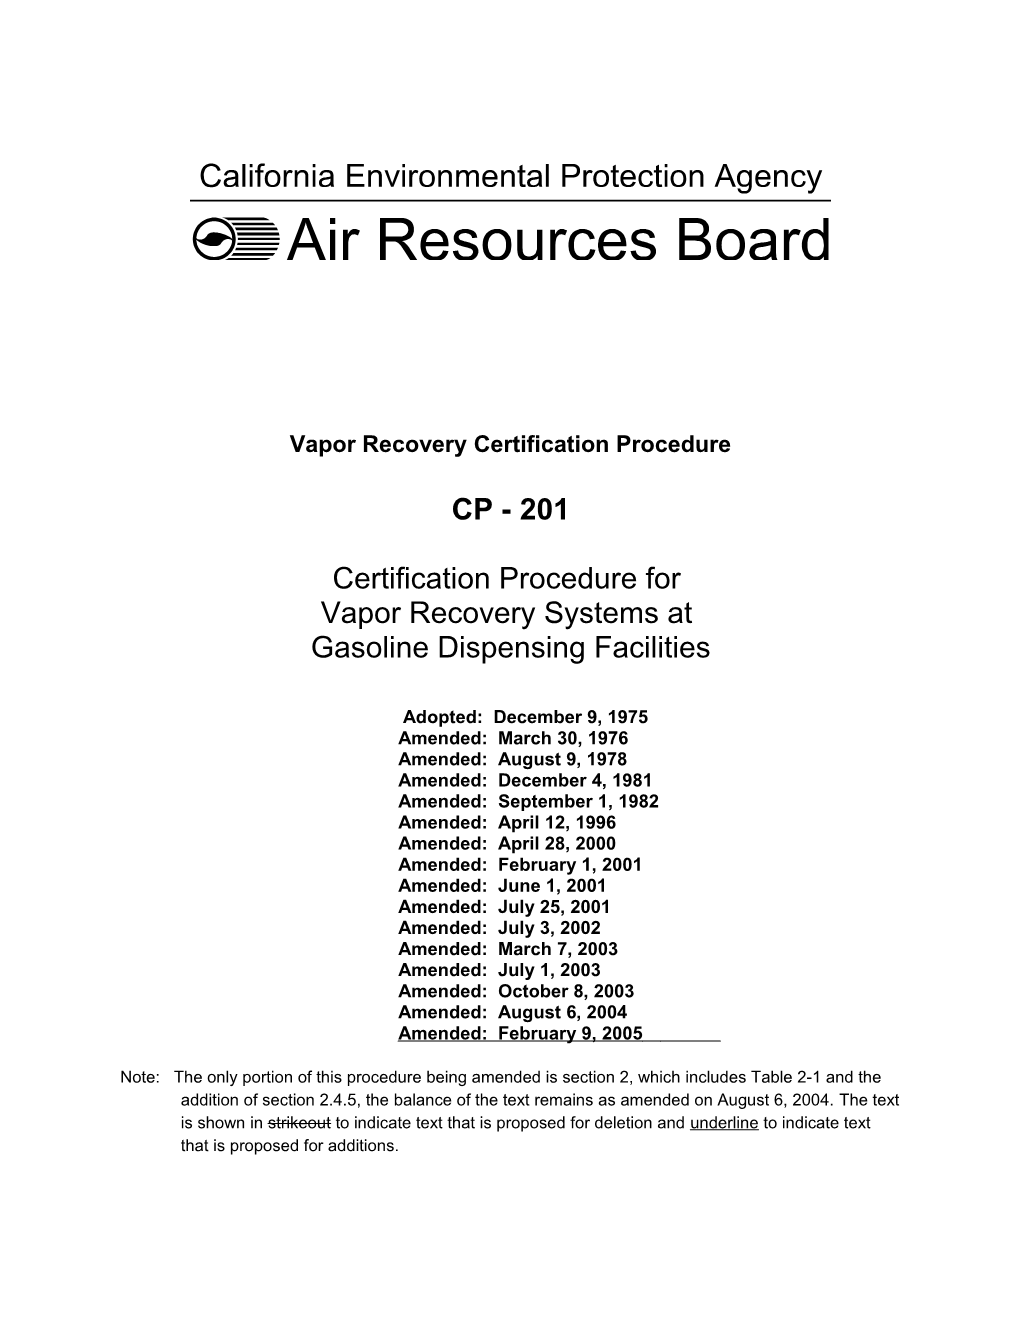 Vapor Recovery Certification Procedure